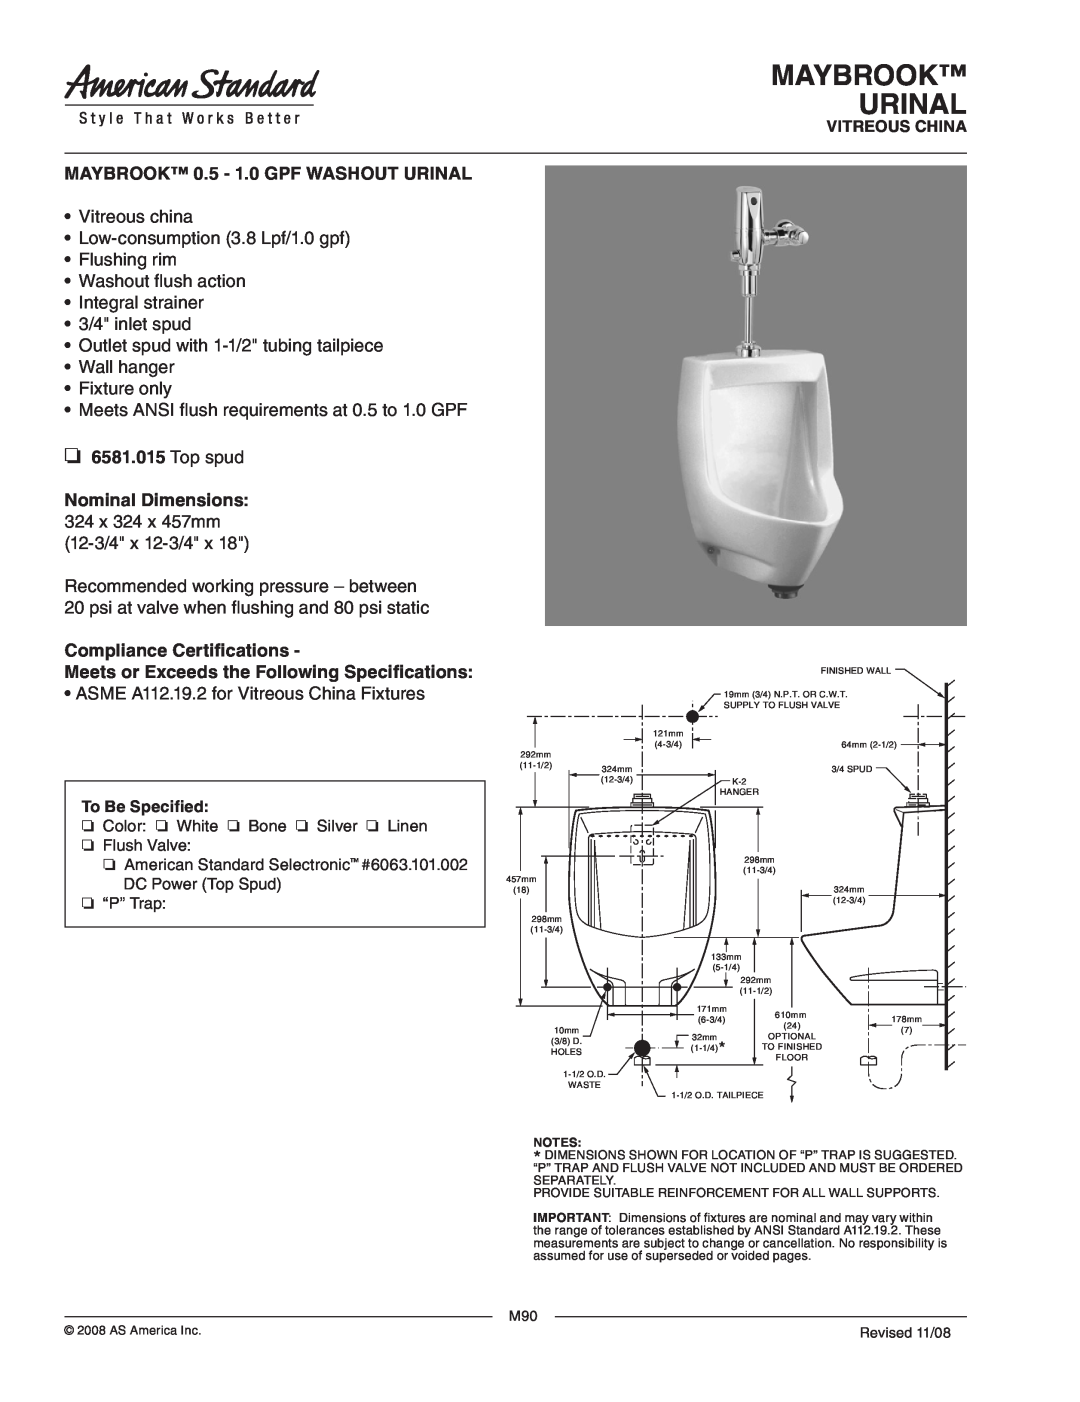 American Standard 6581.015 dimensions Maybrook Urinal, MAYBROOK 0.5 - 1.0 GPF WASHOUT URINAL, Wall hanger Fixture only 